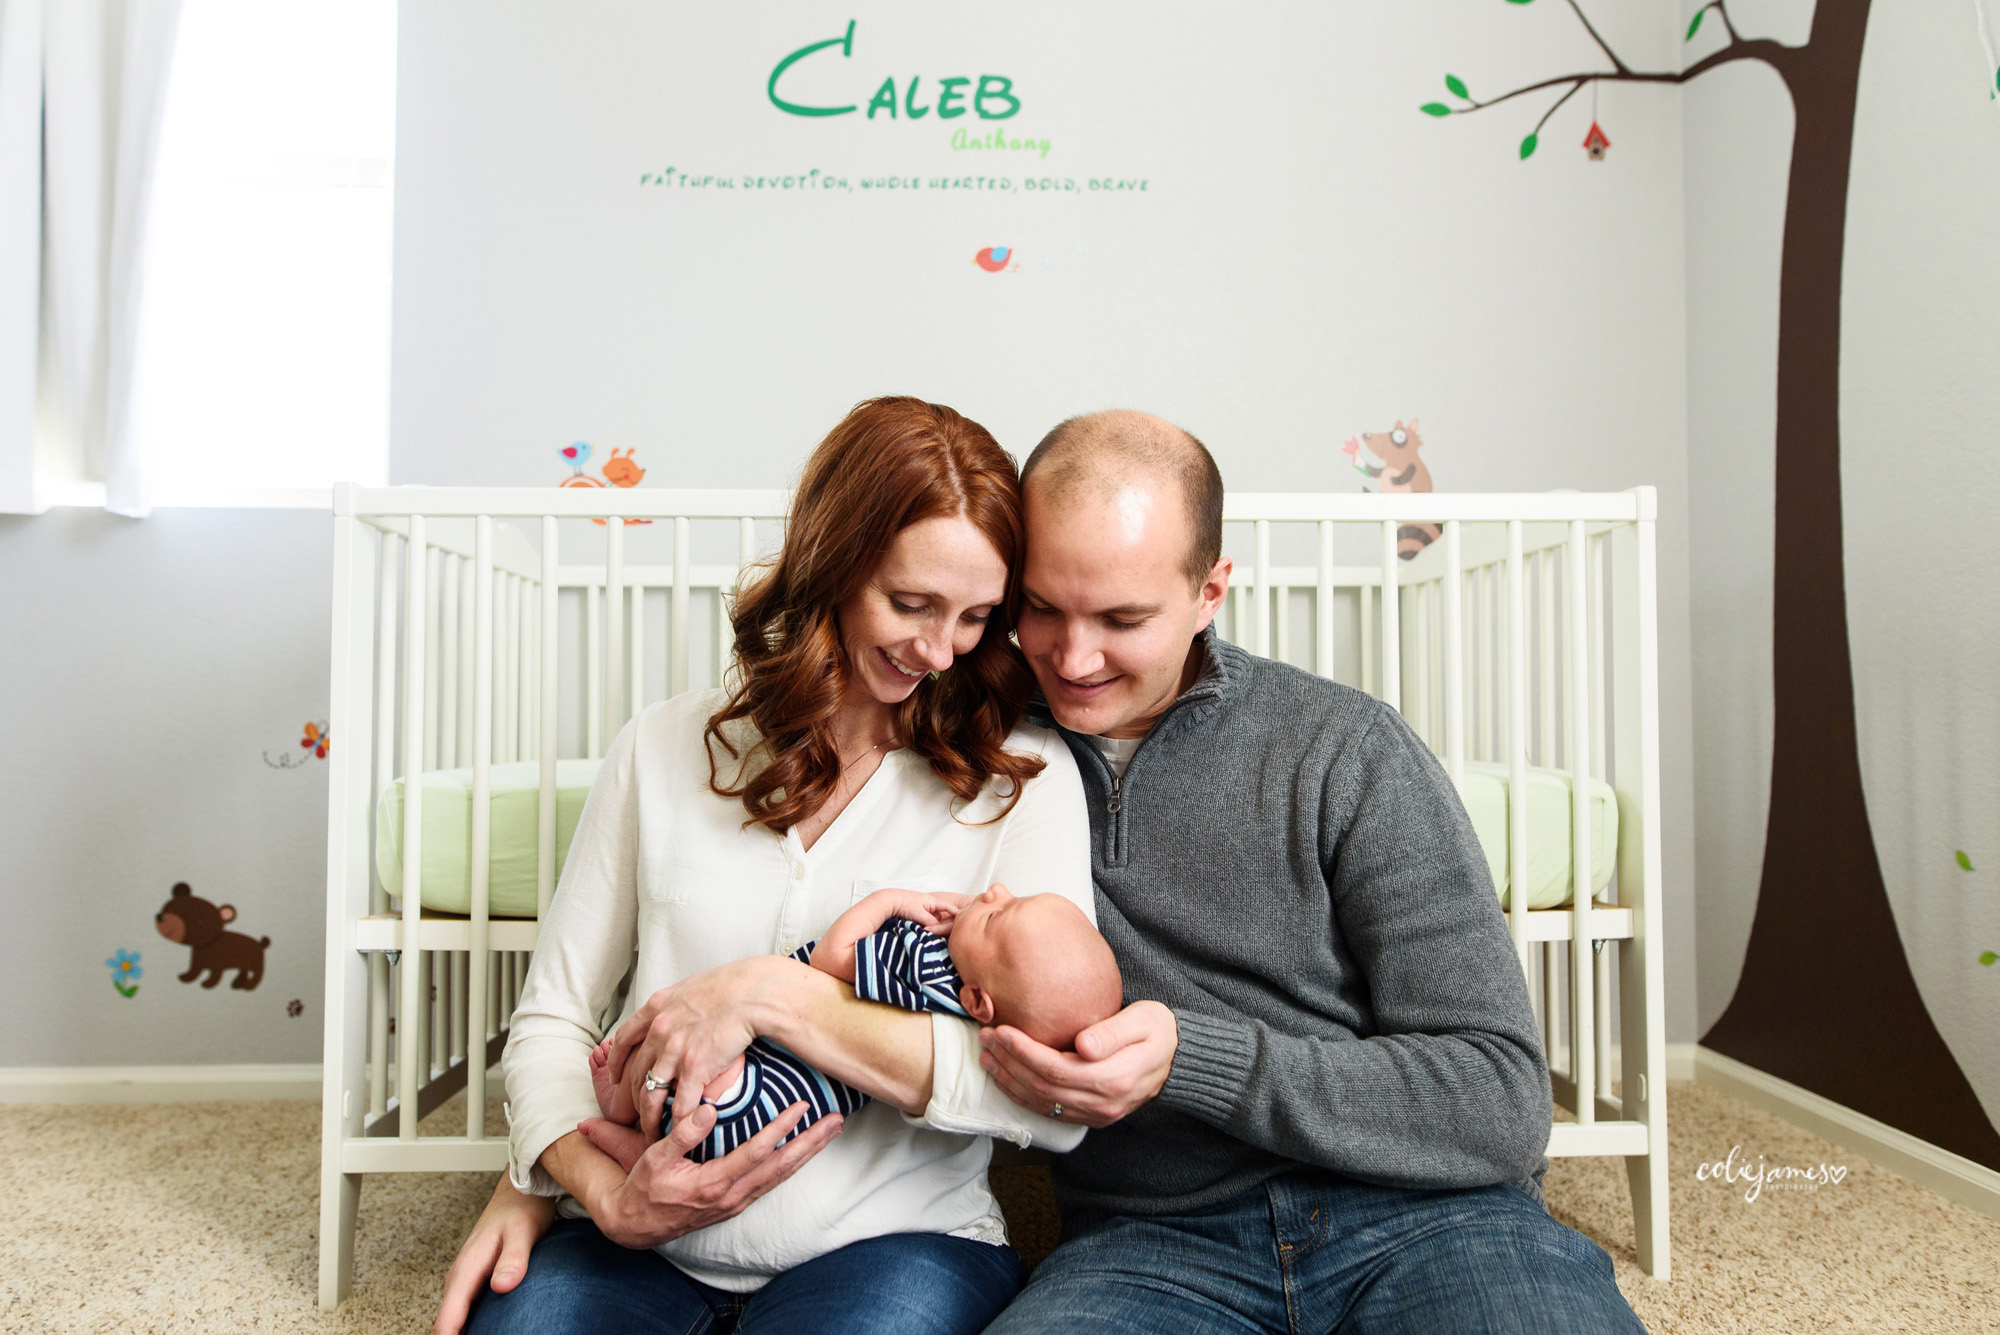 stapleton newborn photography meet caleb 05